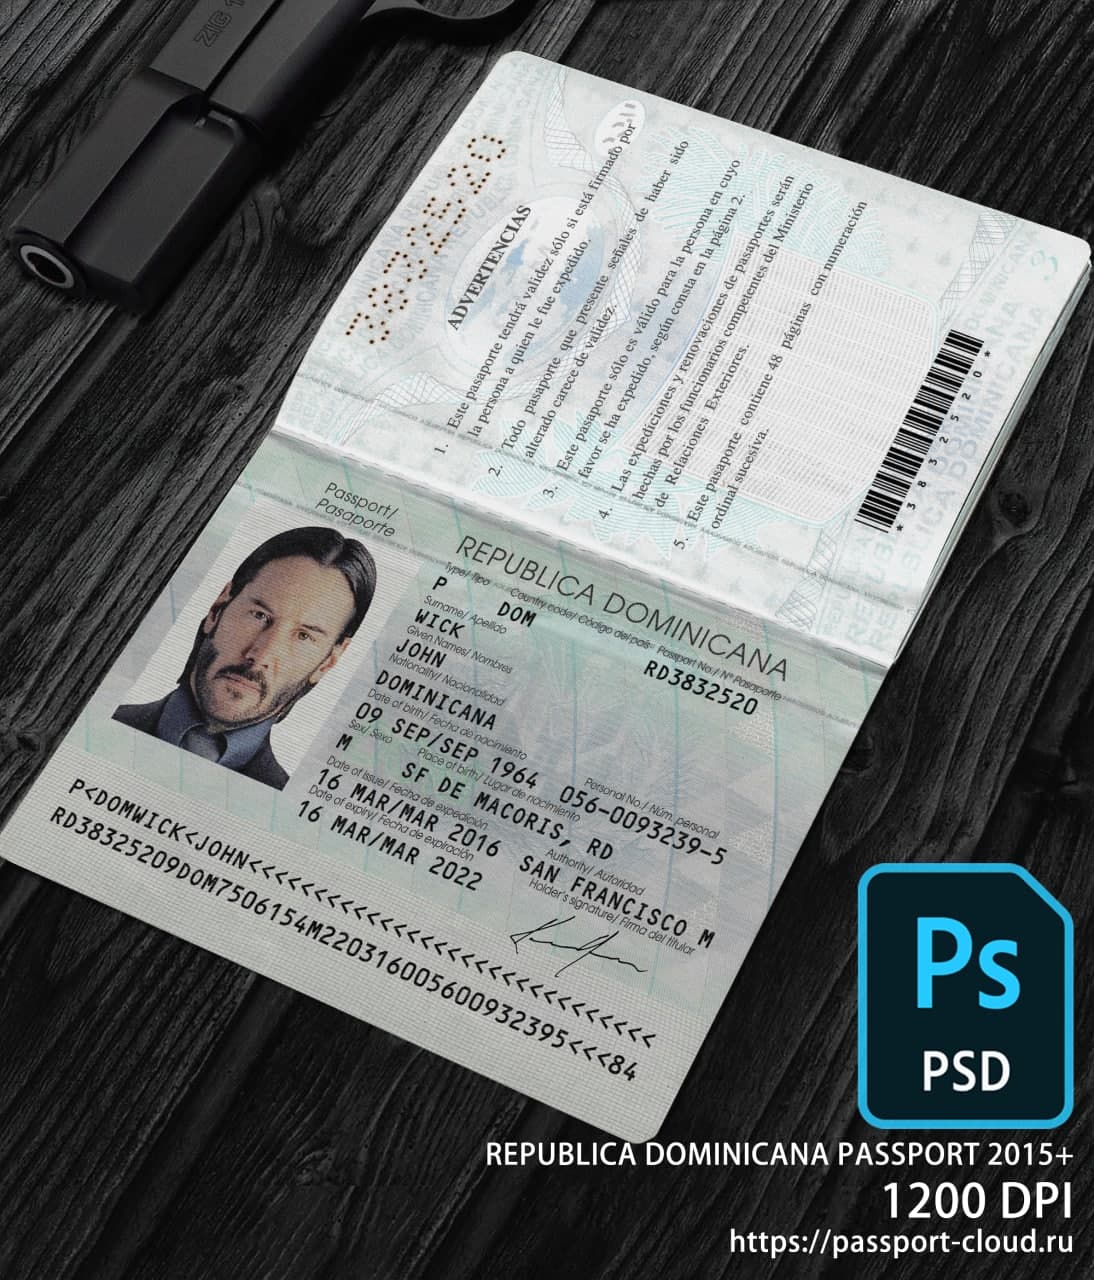 Dominicana Passport 2015+ PSD1